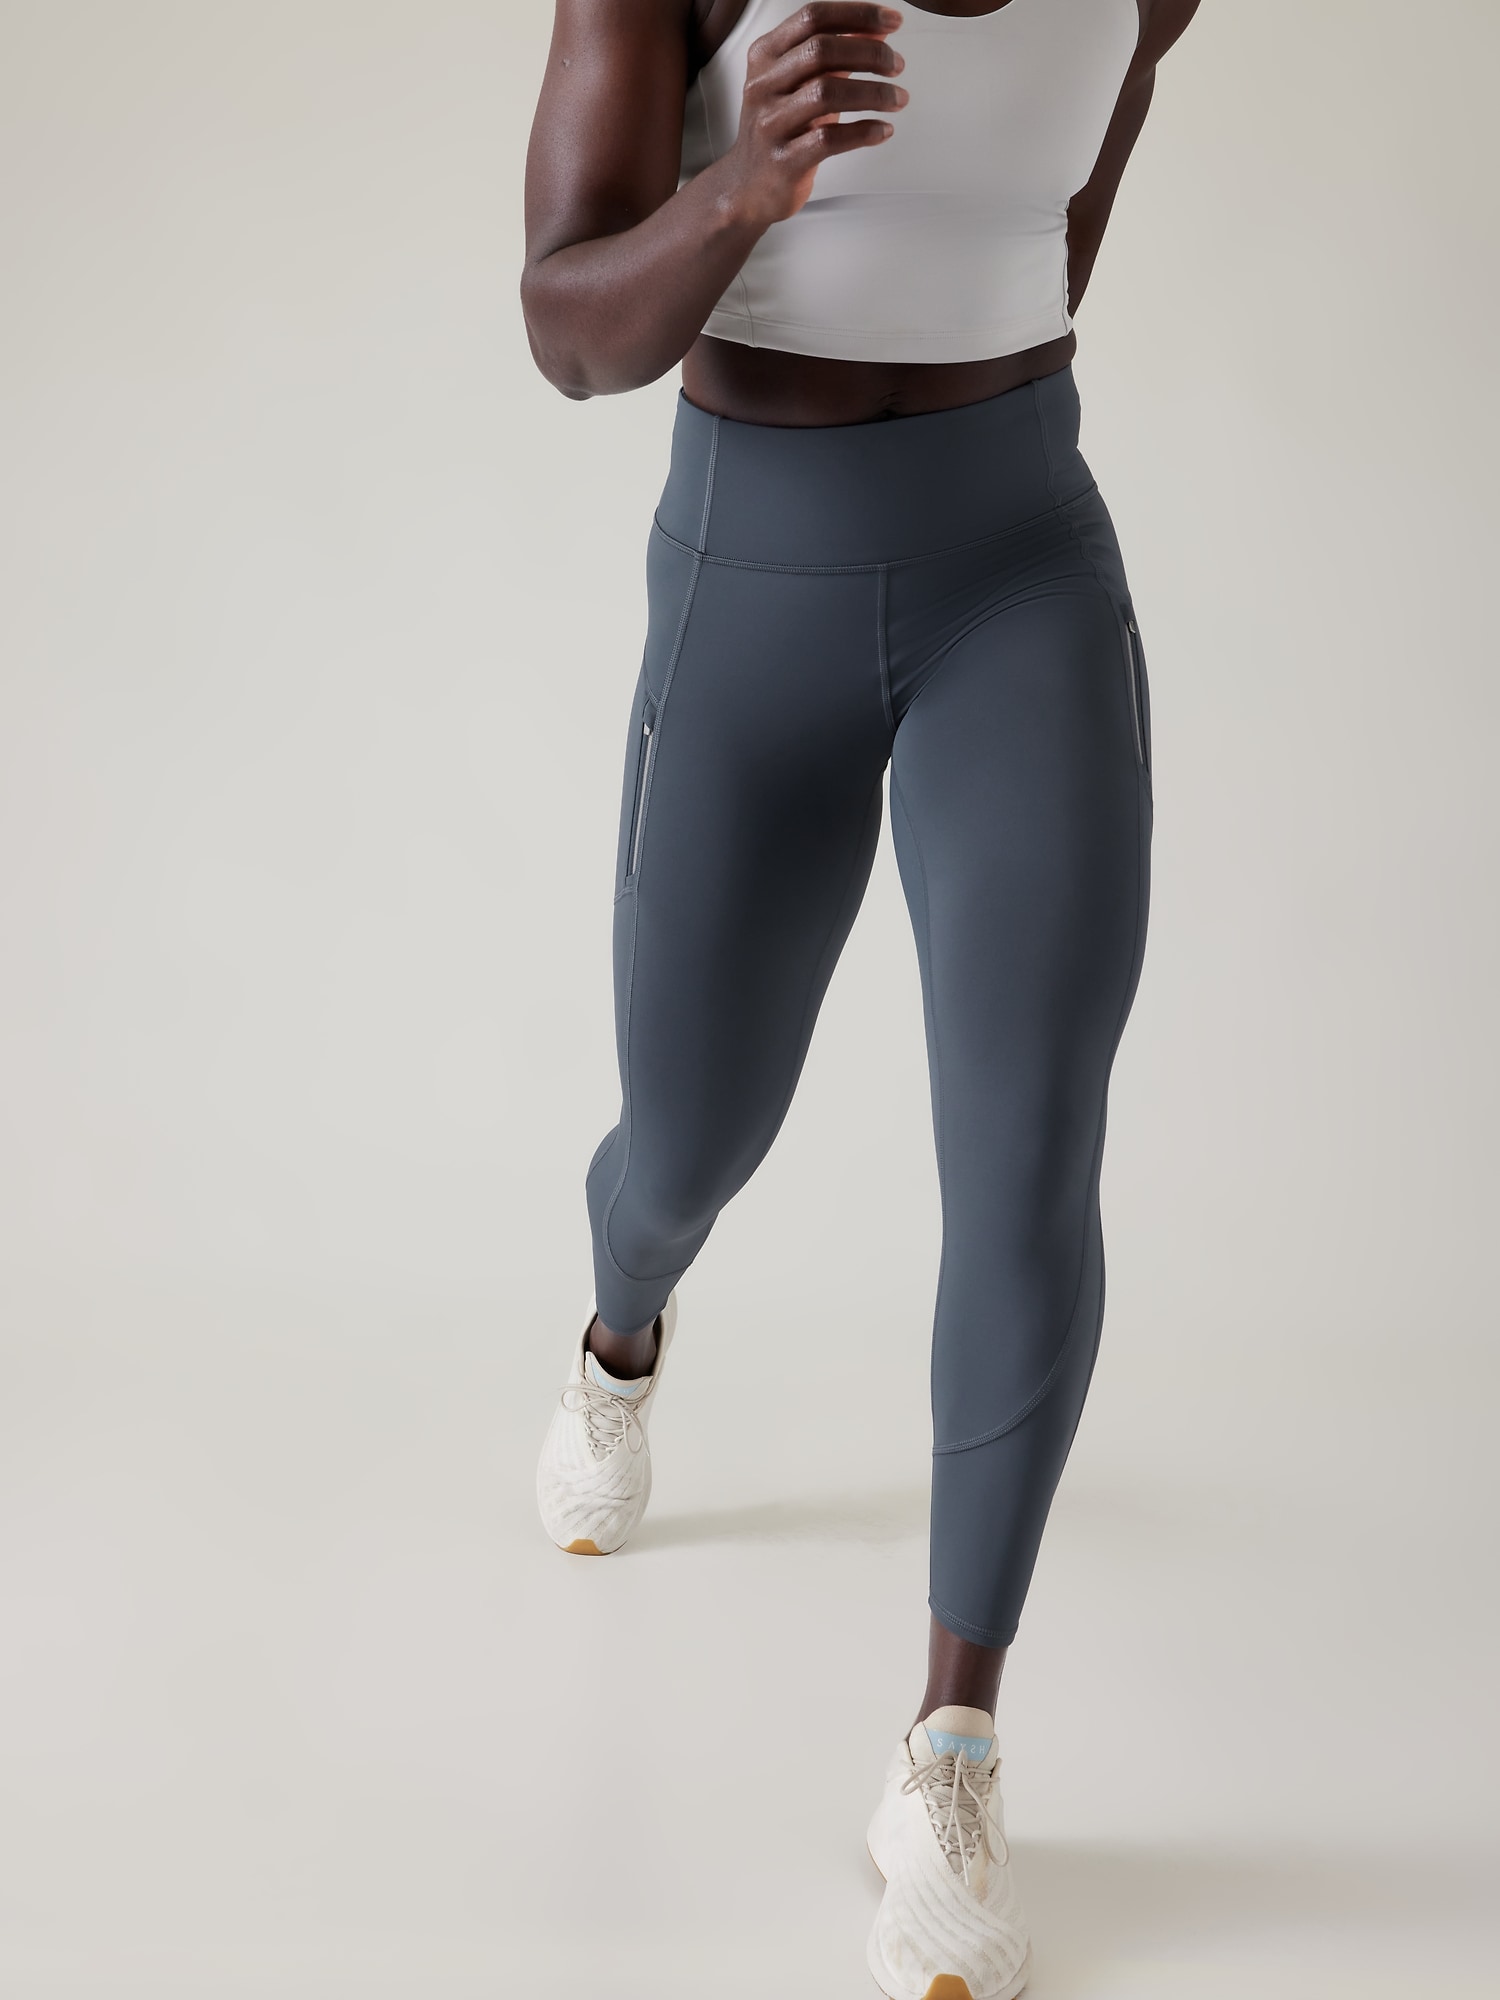 Athleta + Rainier Tight – Spliced Floral Minimalistic Grey